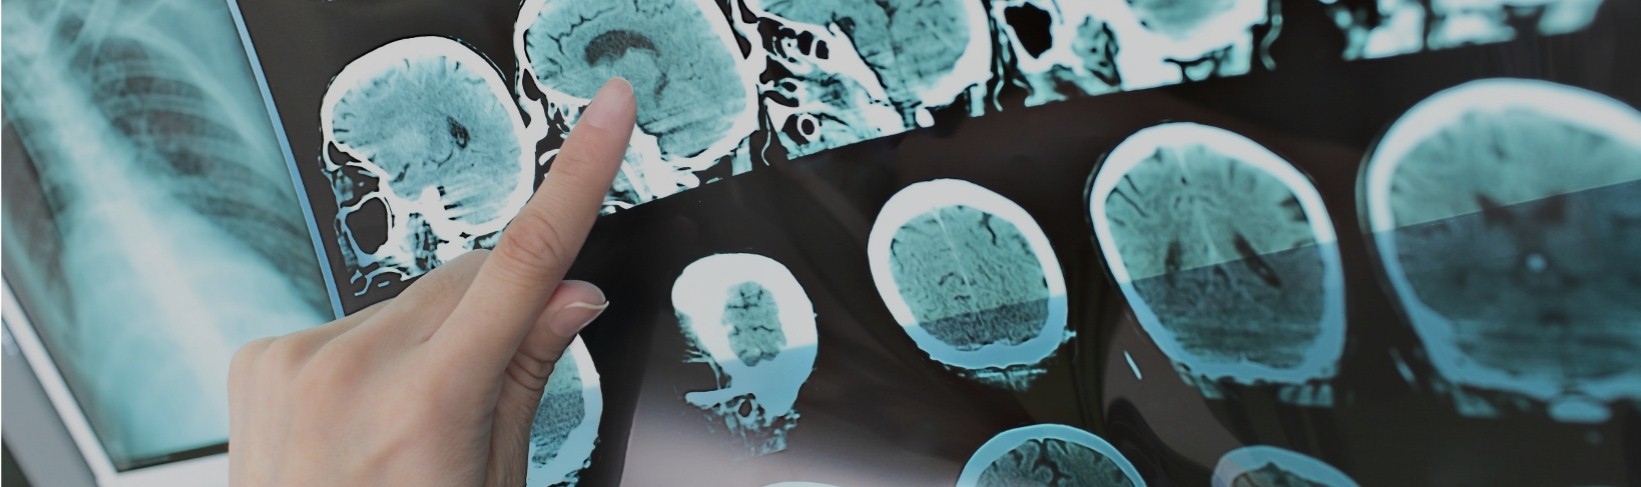 Imaging showing brain activity